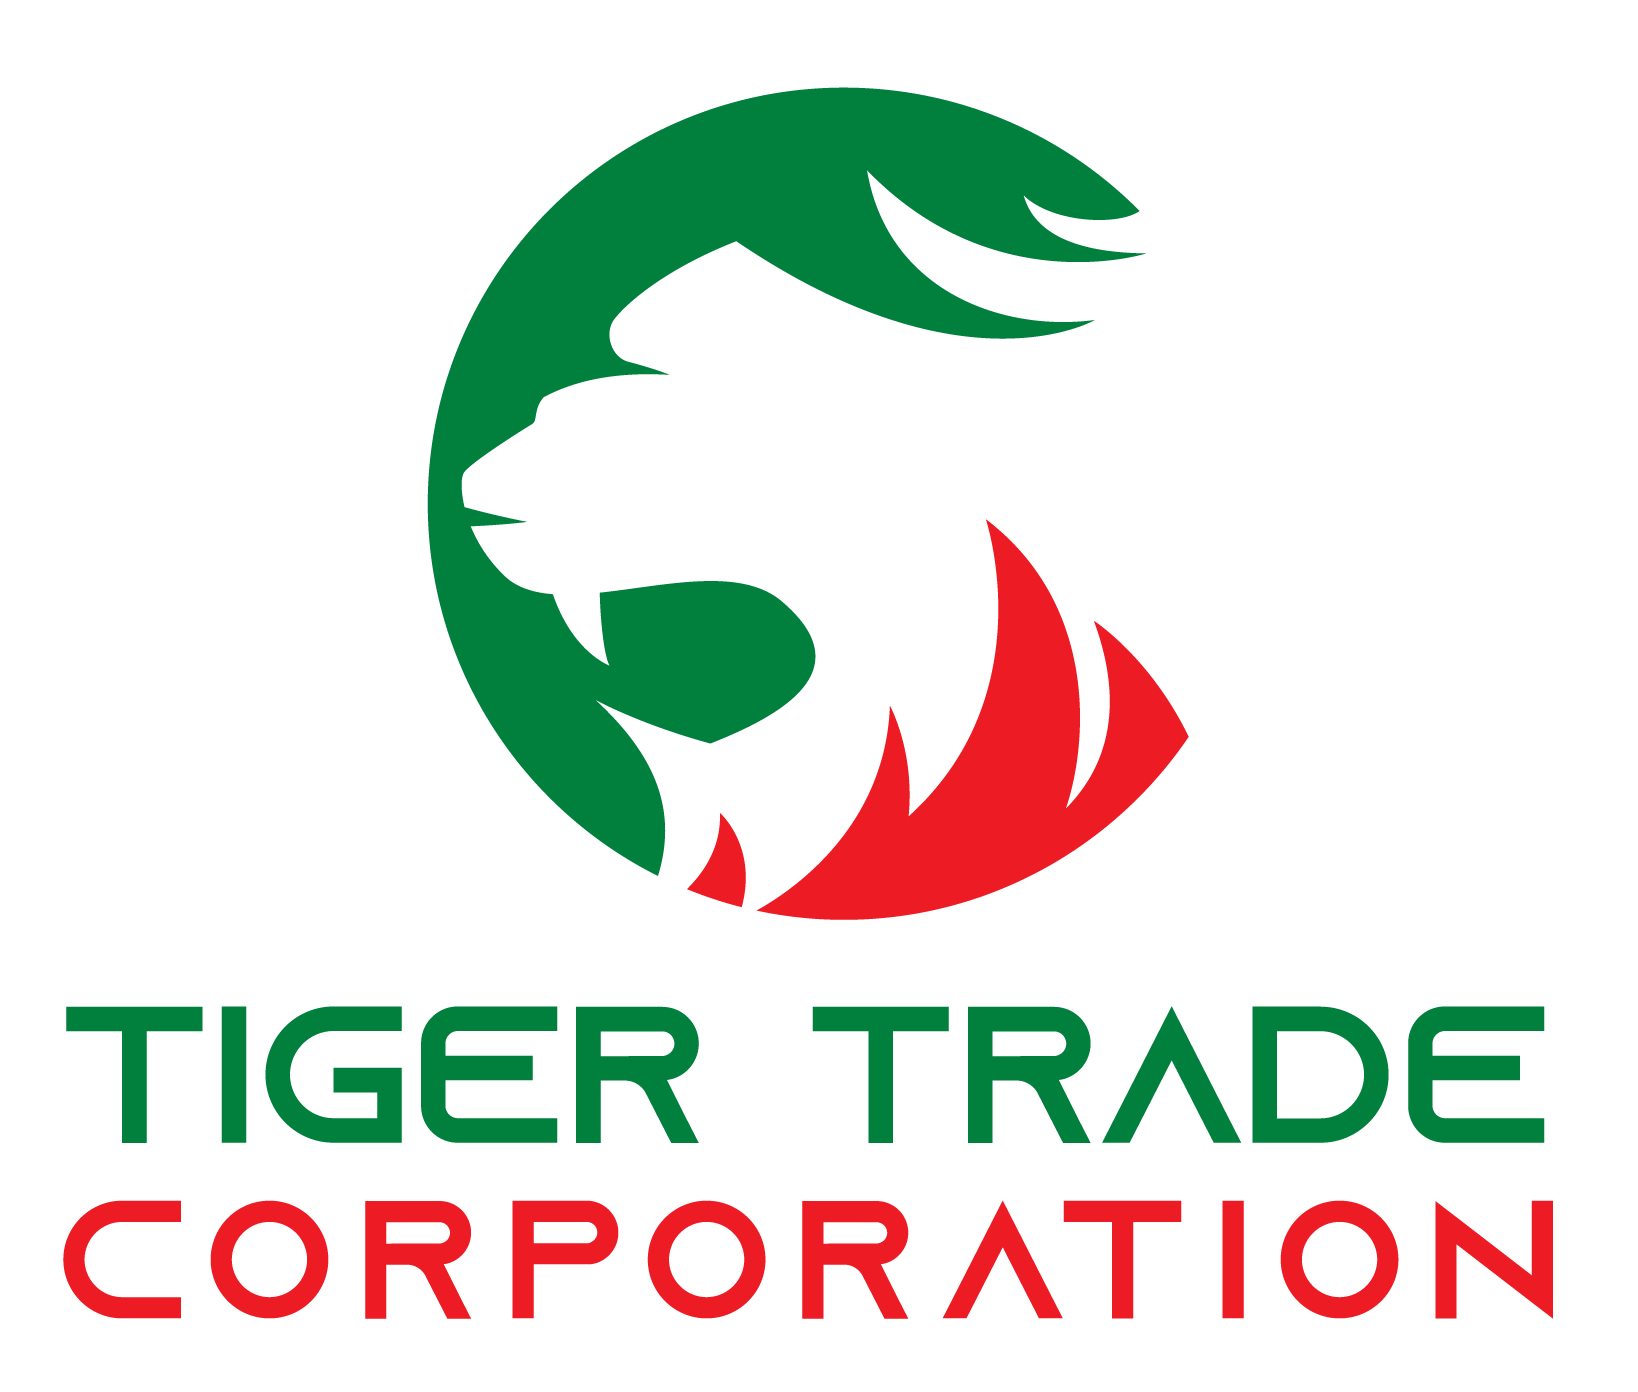 TIGER TRADE CORPORATION